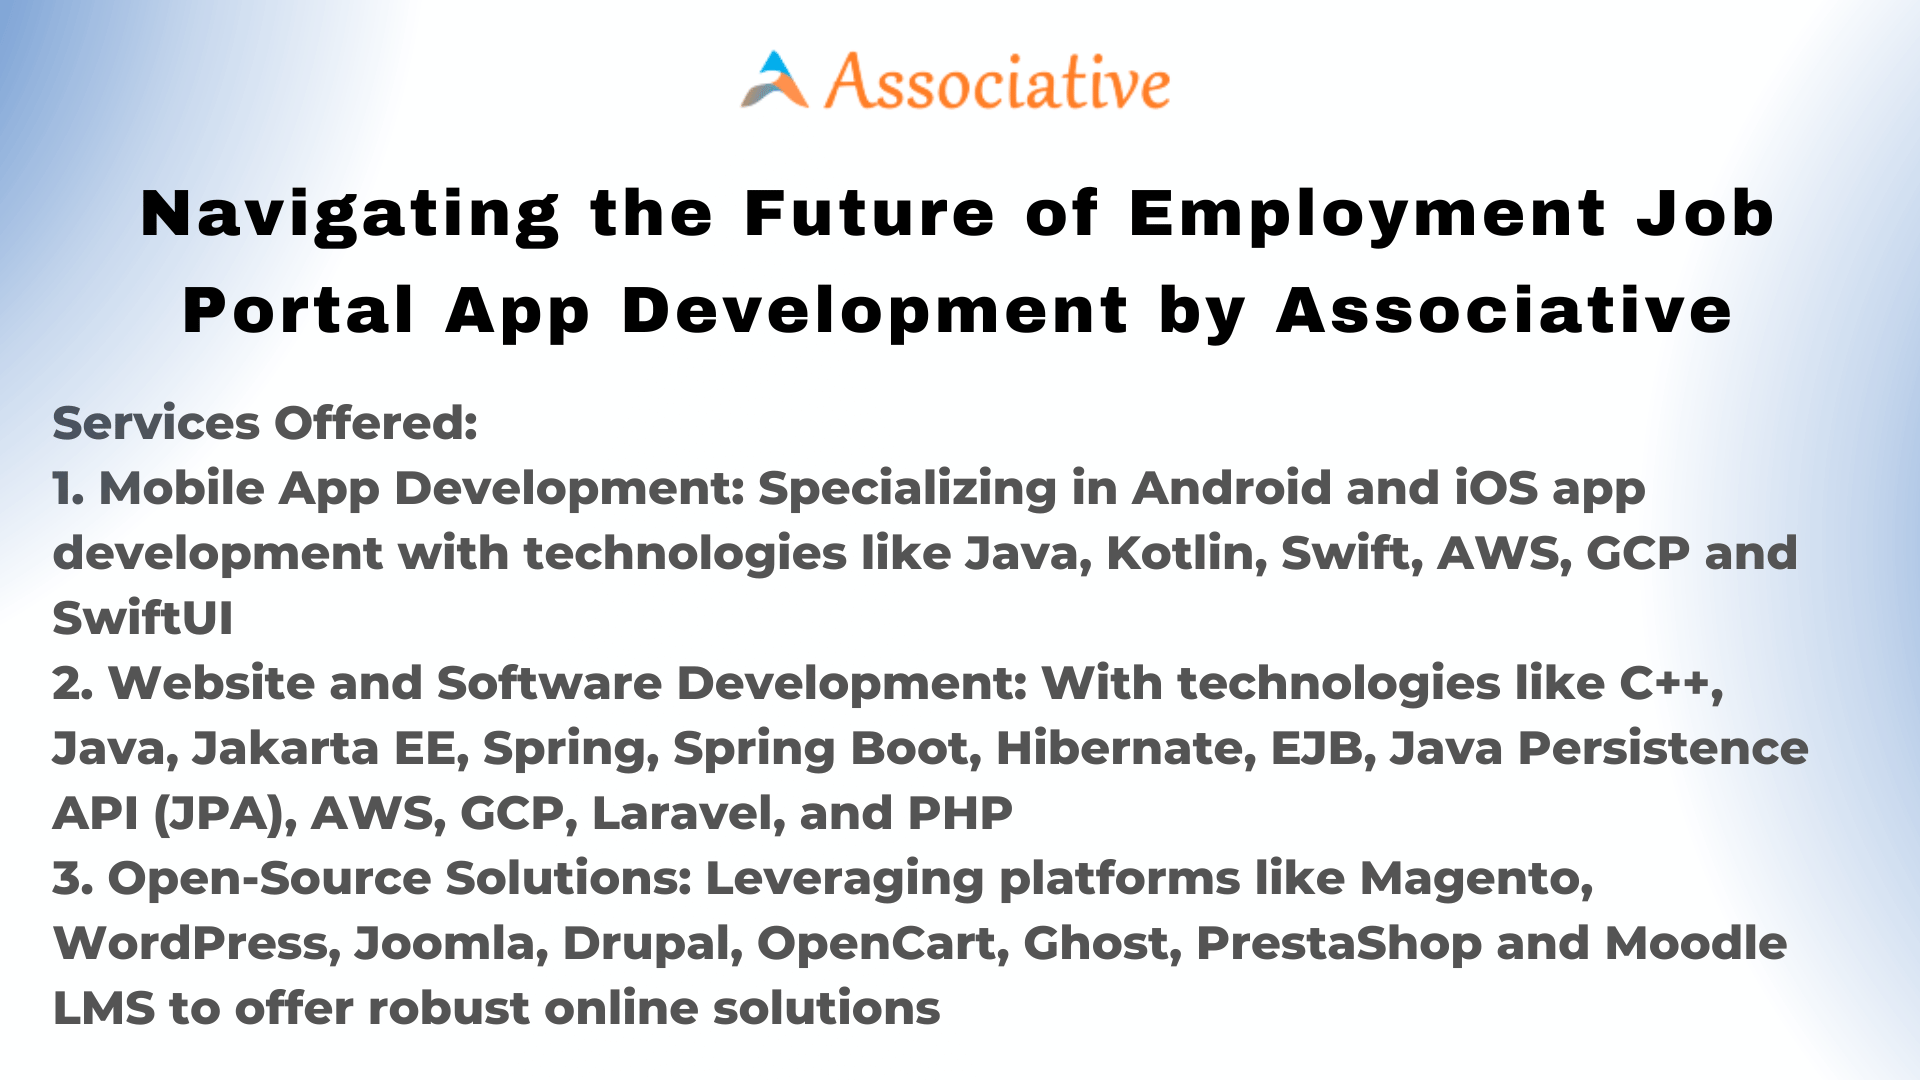 Navigating the Future of Employment Job Portal App Development by Associative